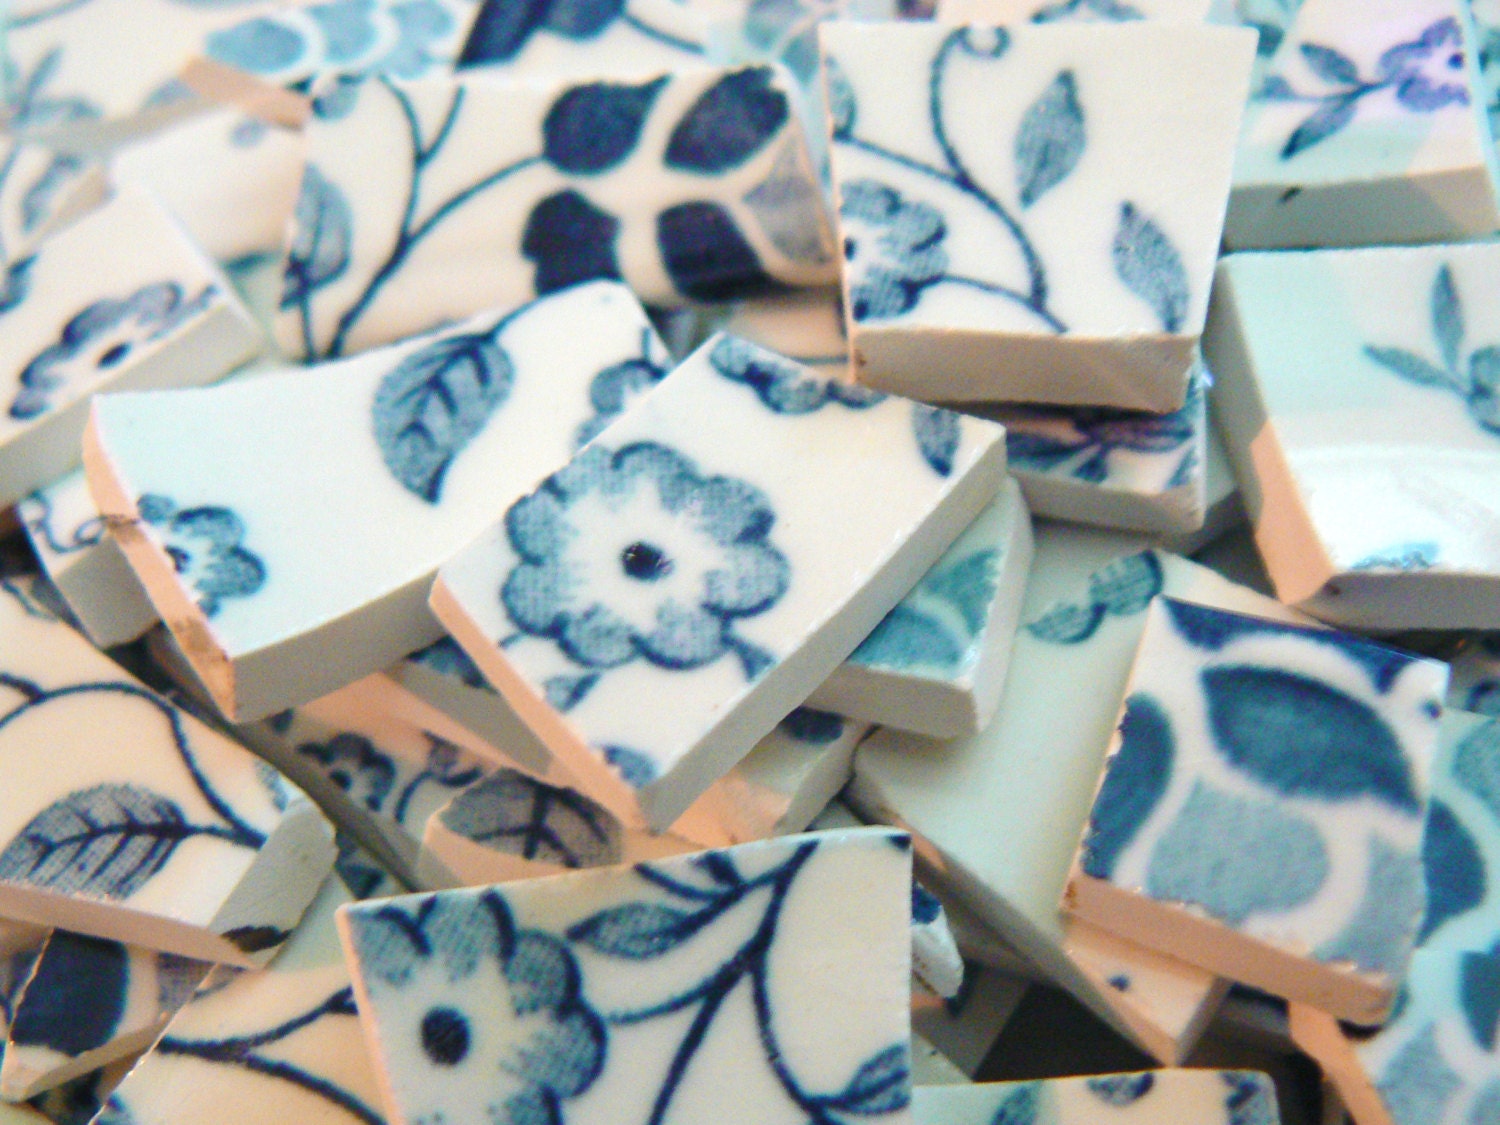 Mosaic China  Plate Tiles Blue & White Floral Patterened Set of 110 plus Pique Assiette - PamelasPlatePieces